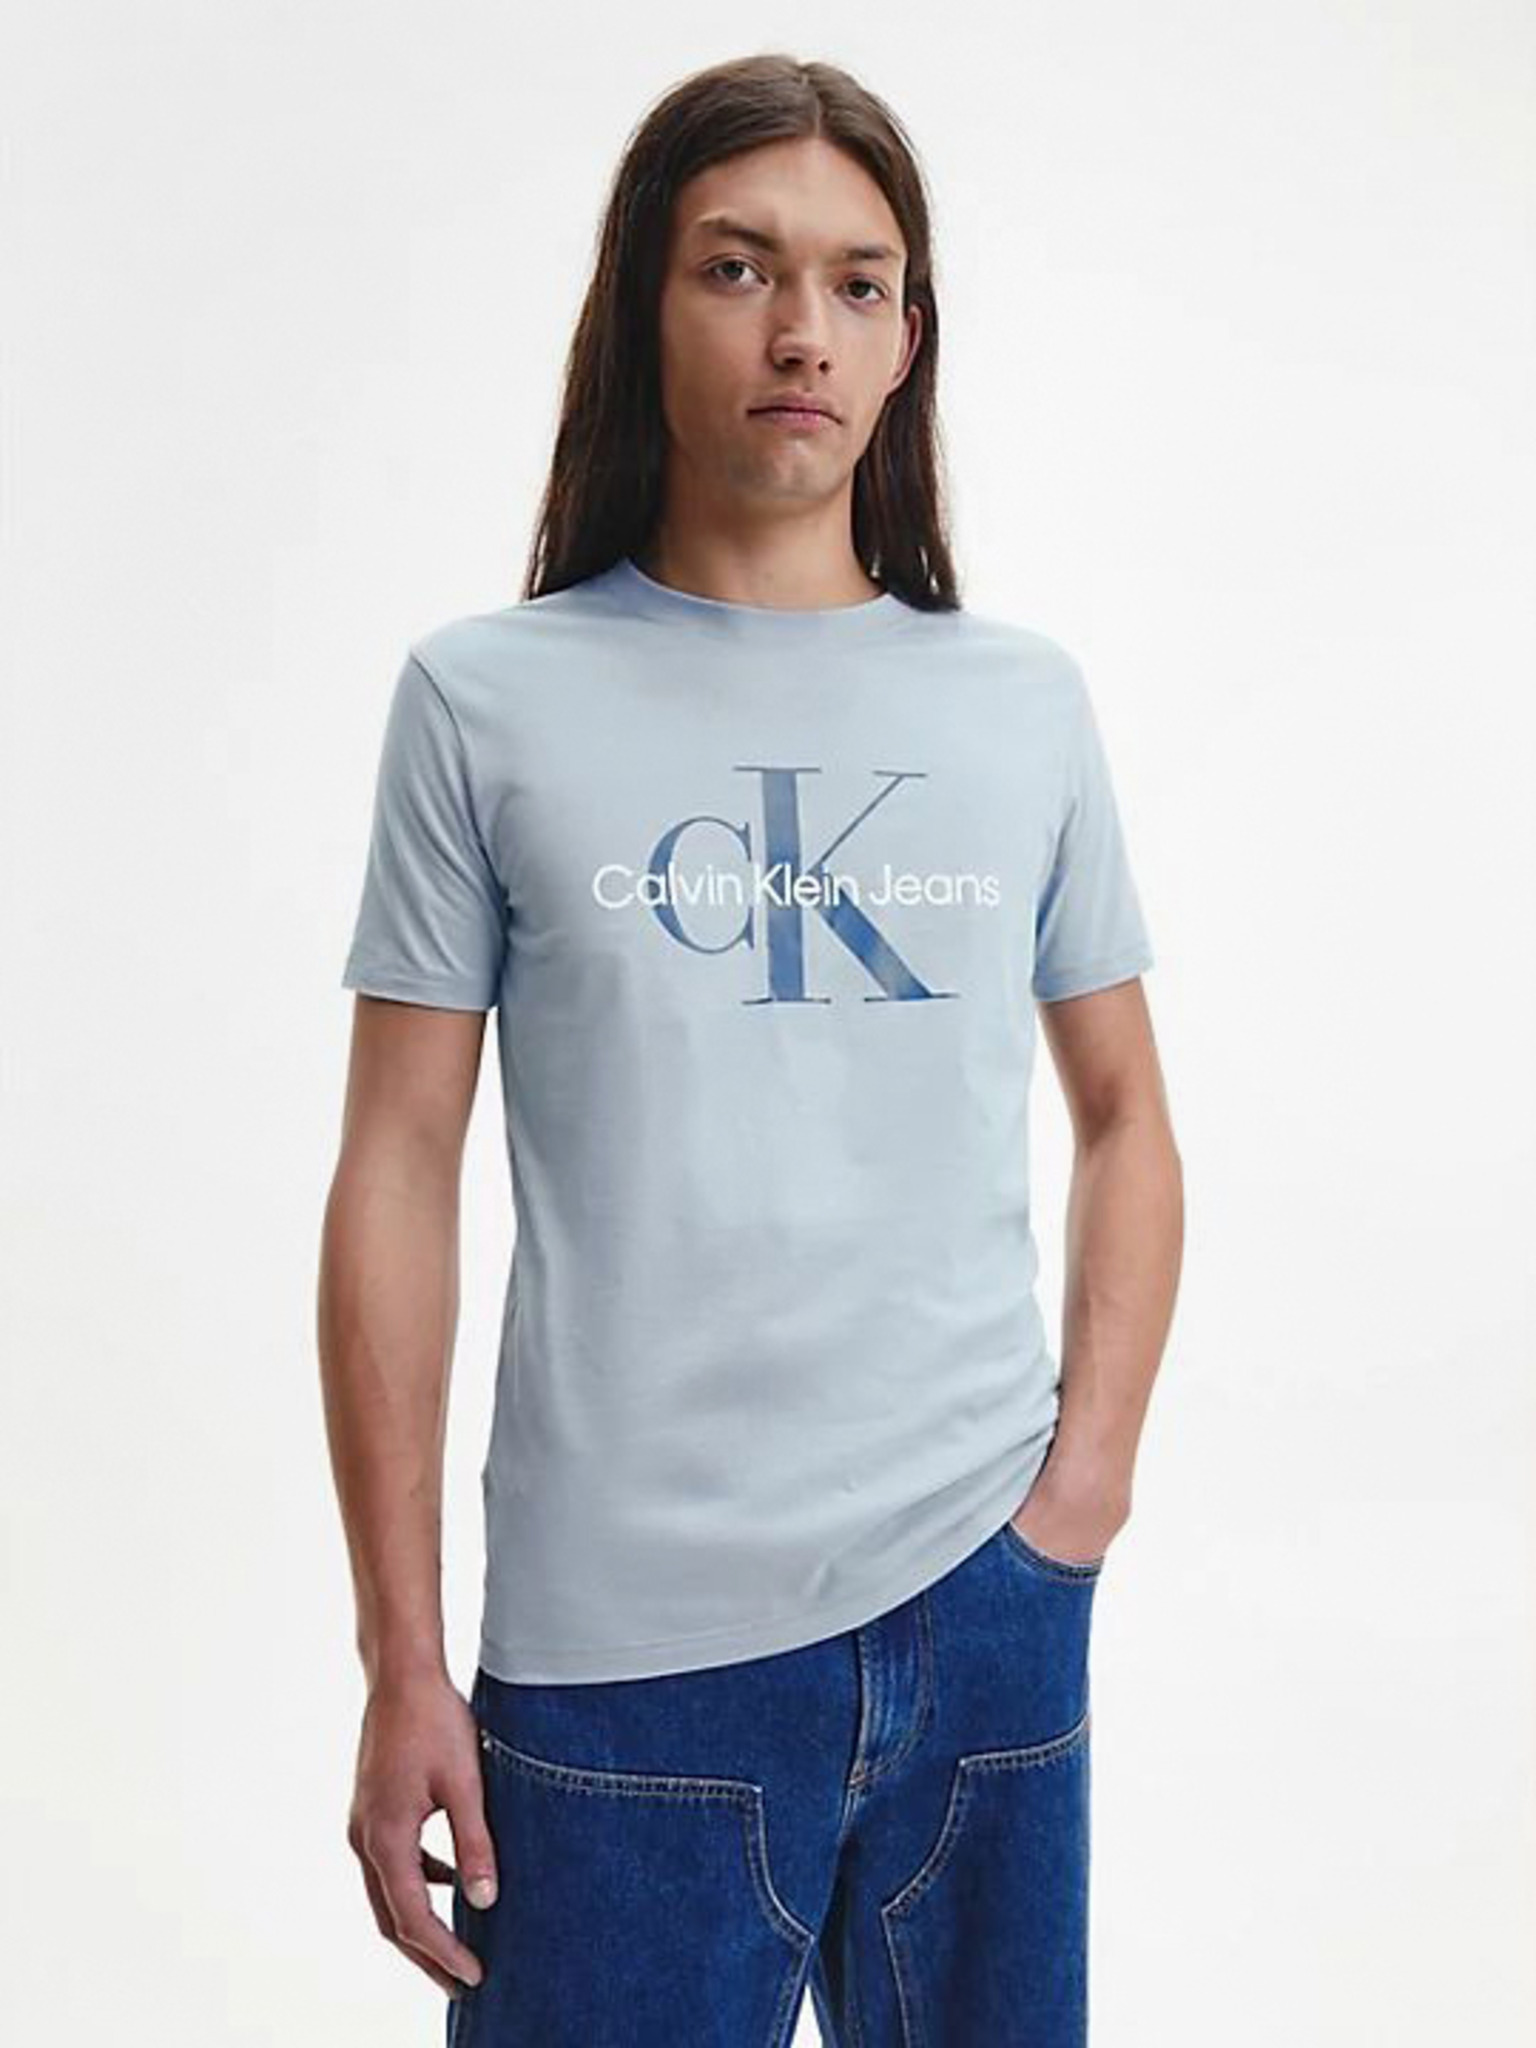 T-shirt men Calvin Klein Jeans